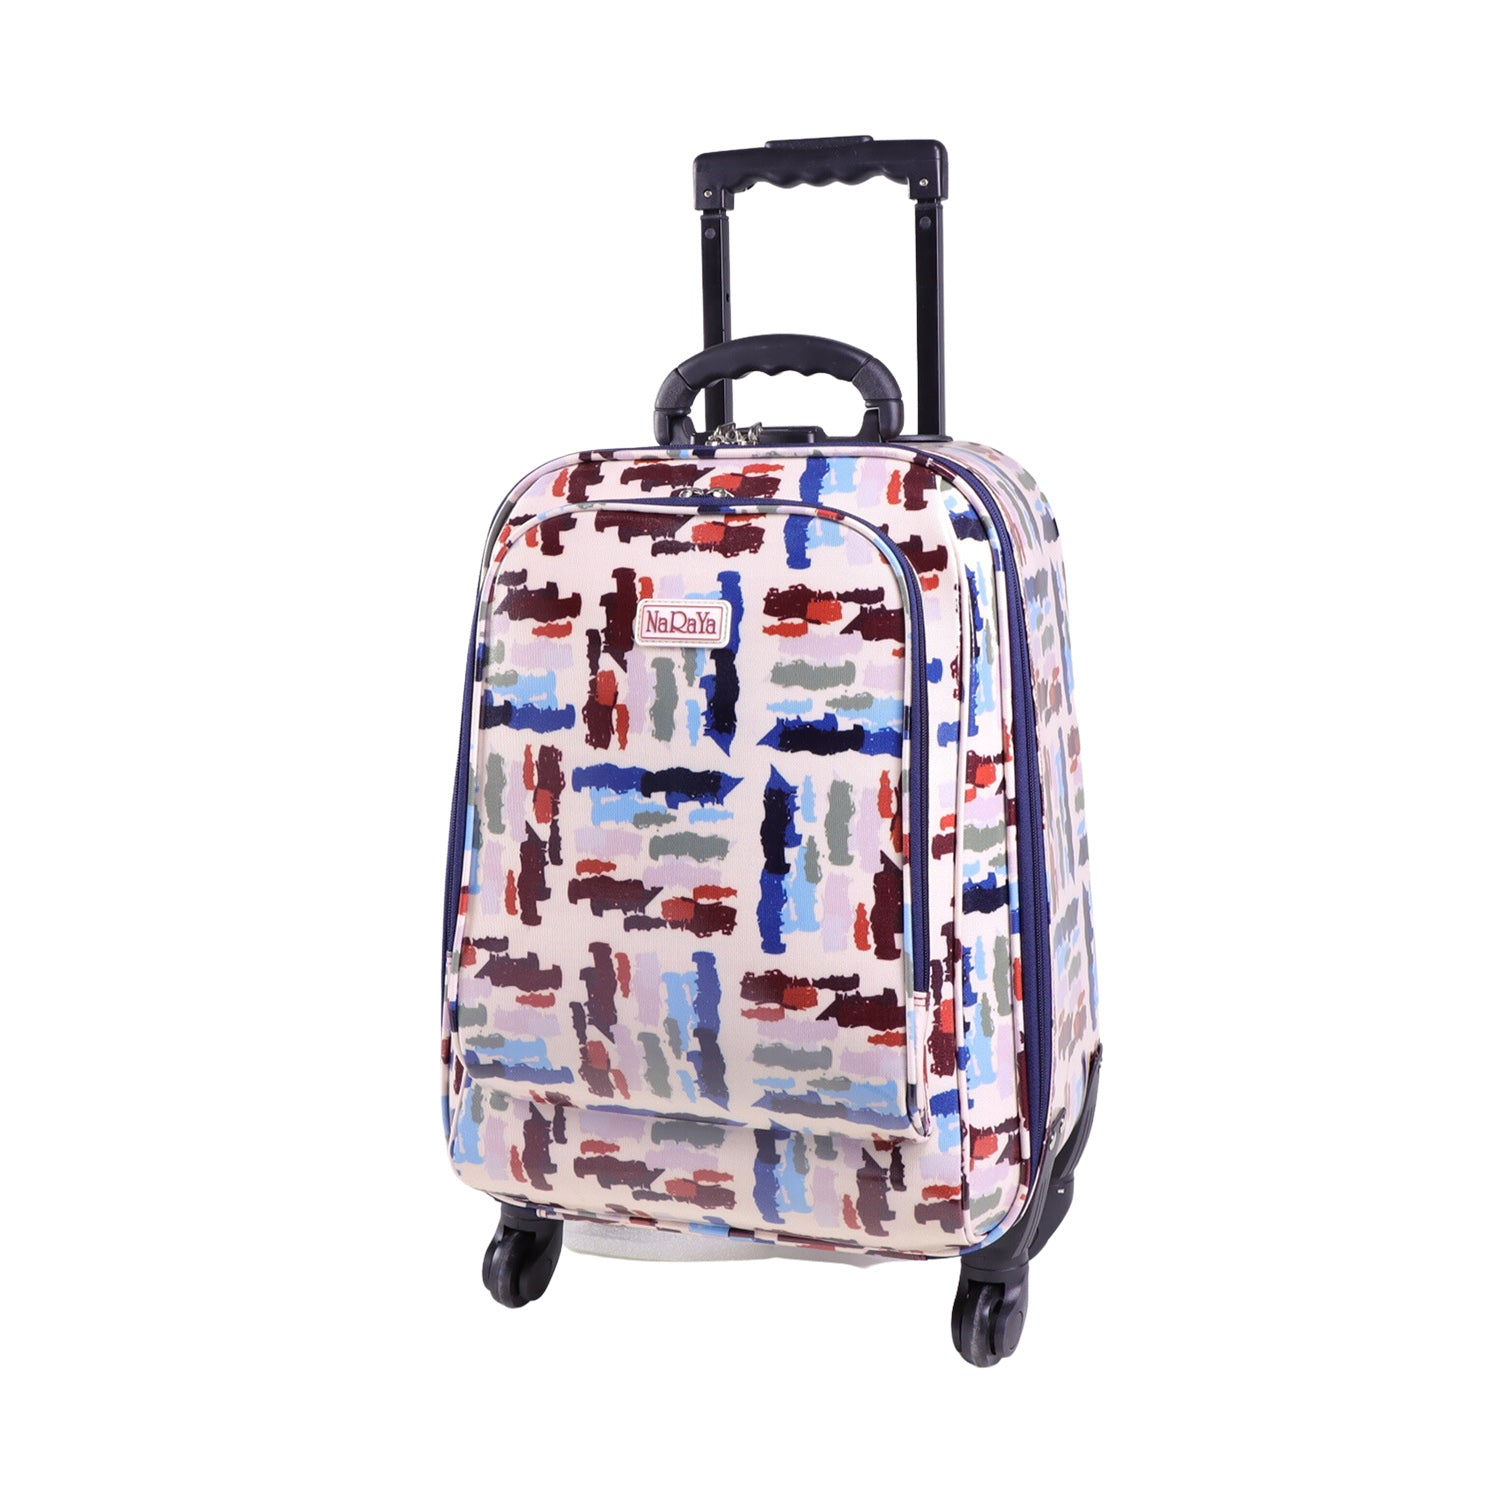 NaRaYa Laminated Canvas Luggage